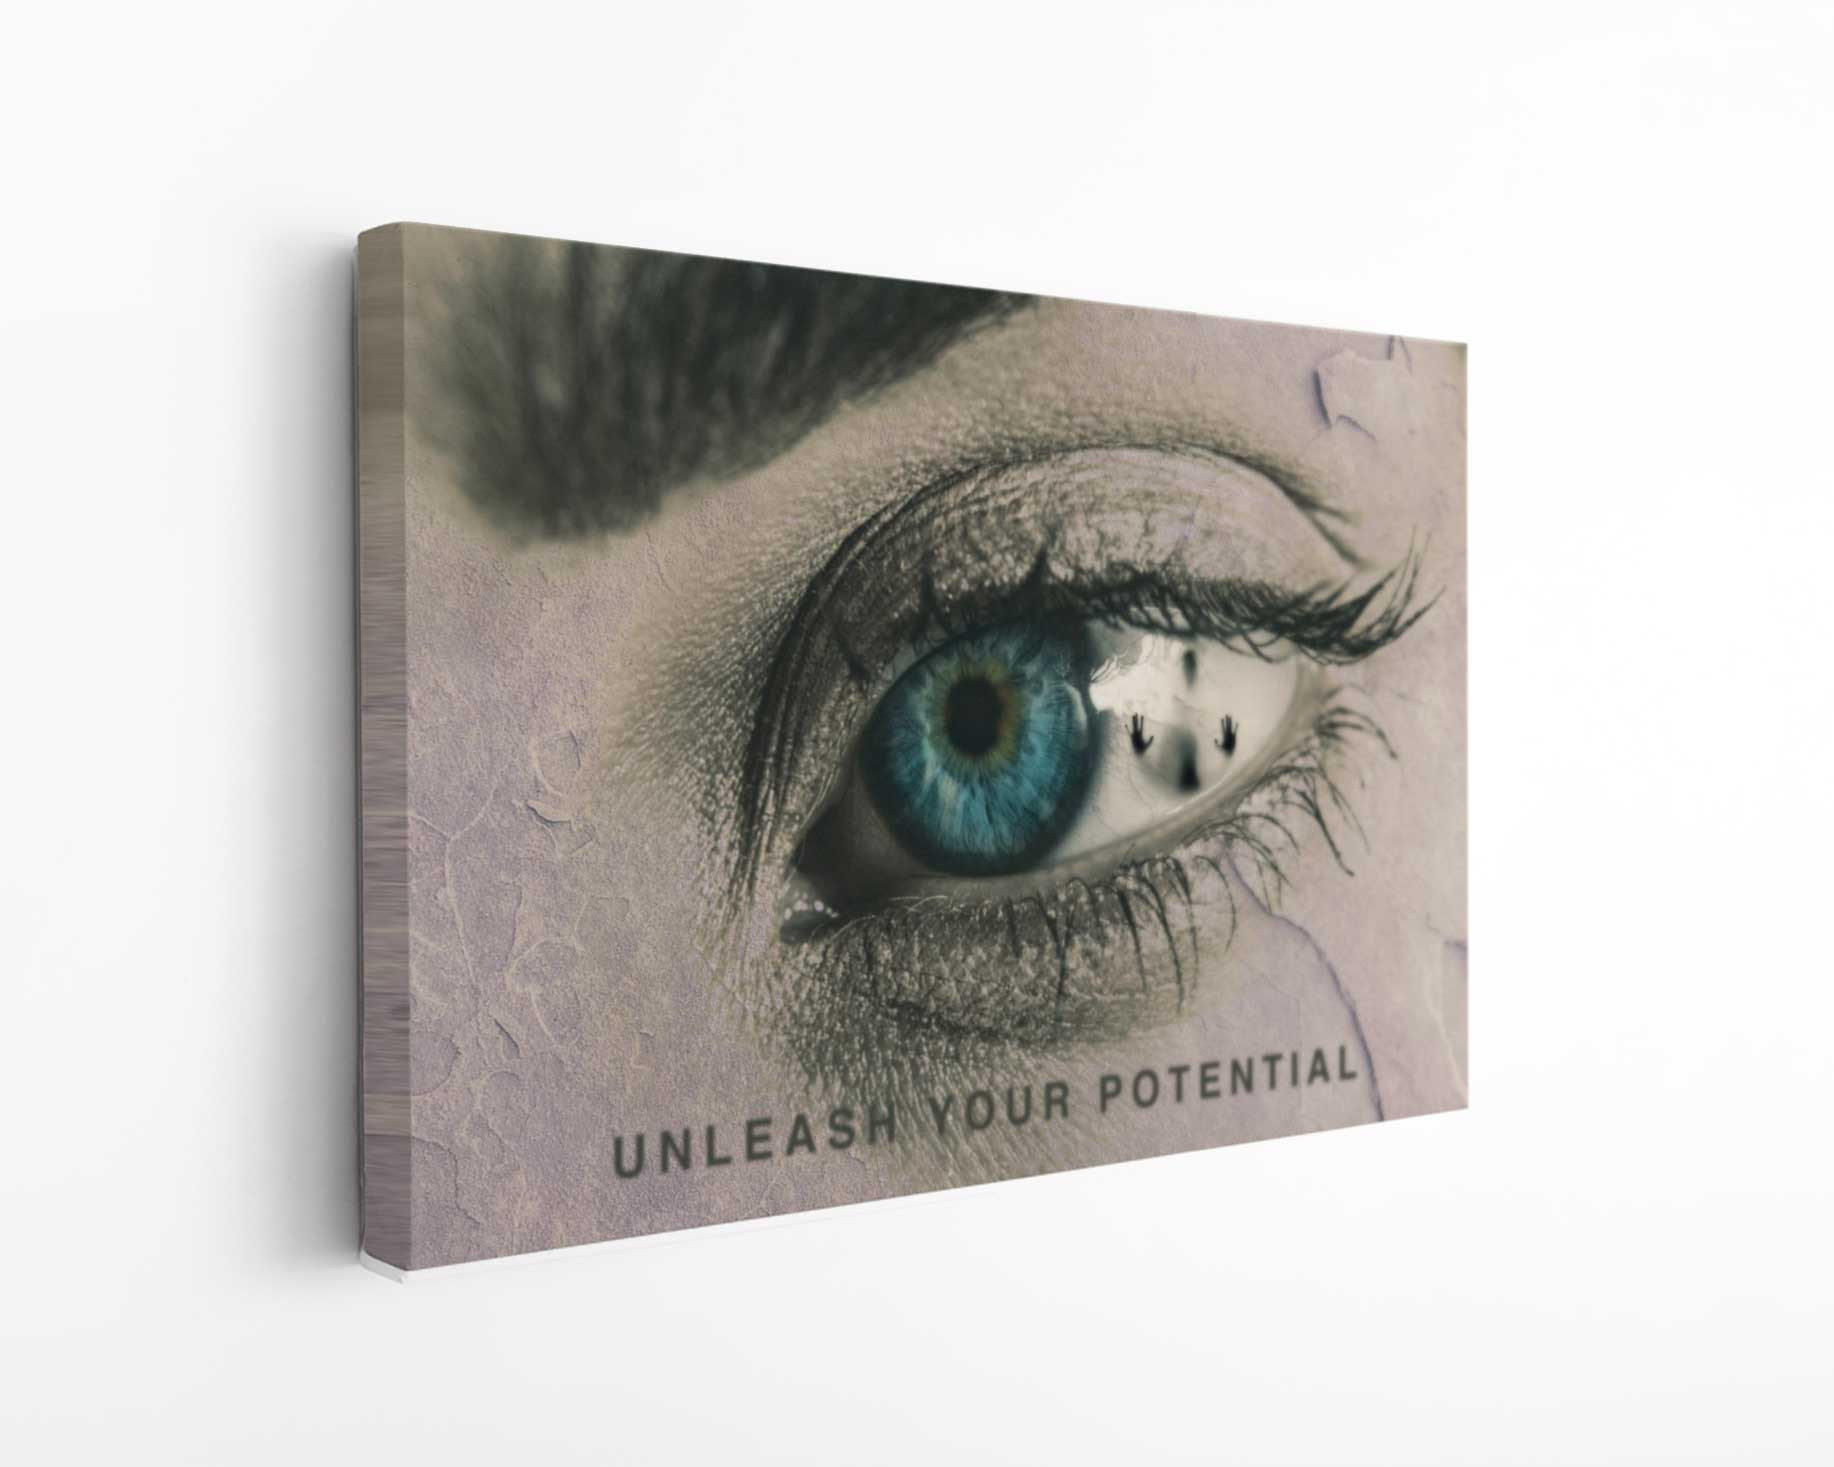 Unleash Your Potential Canvas Print Motivation Photography Wall Art